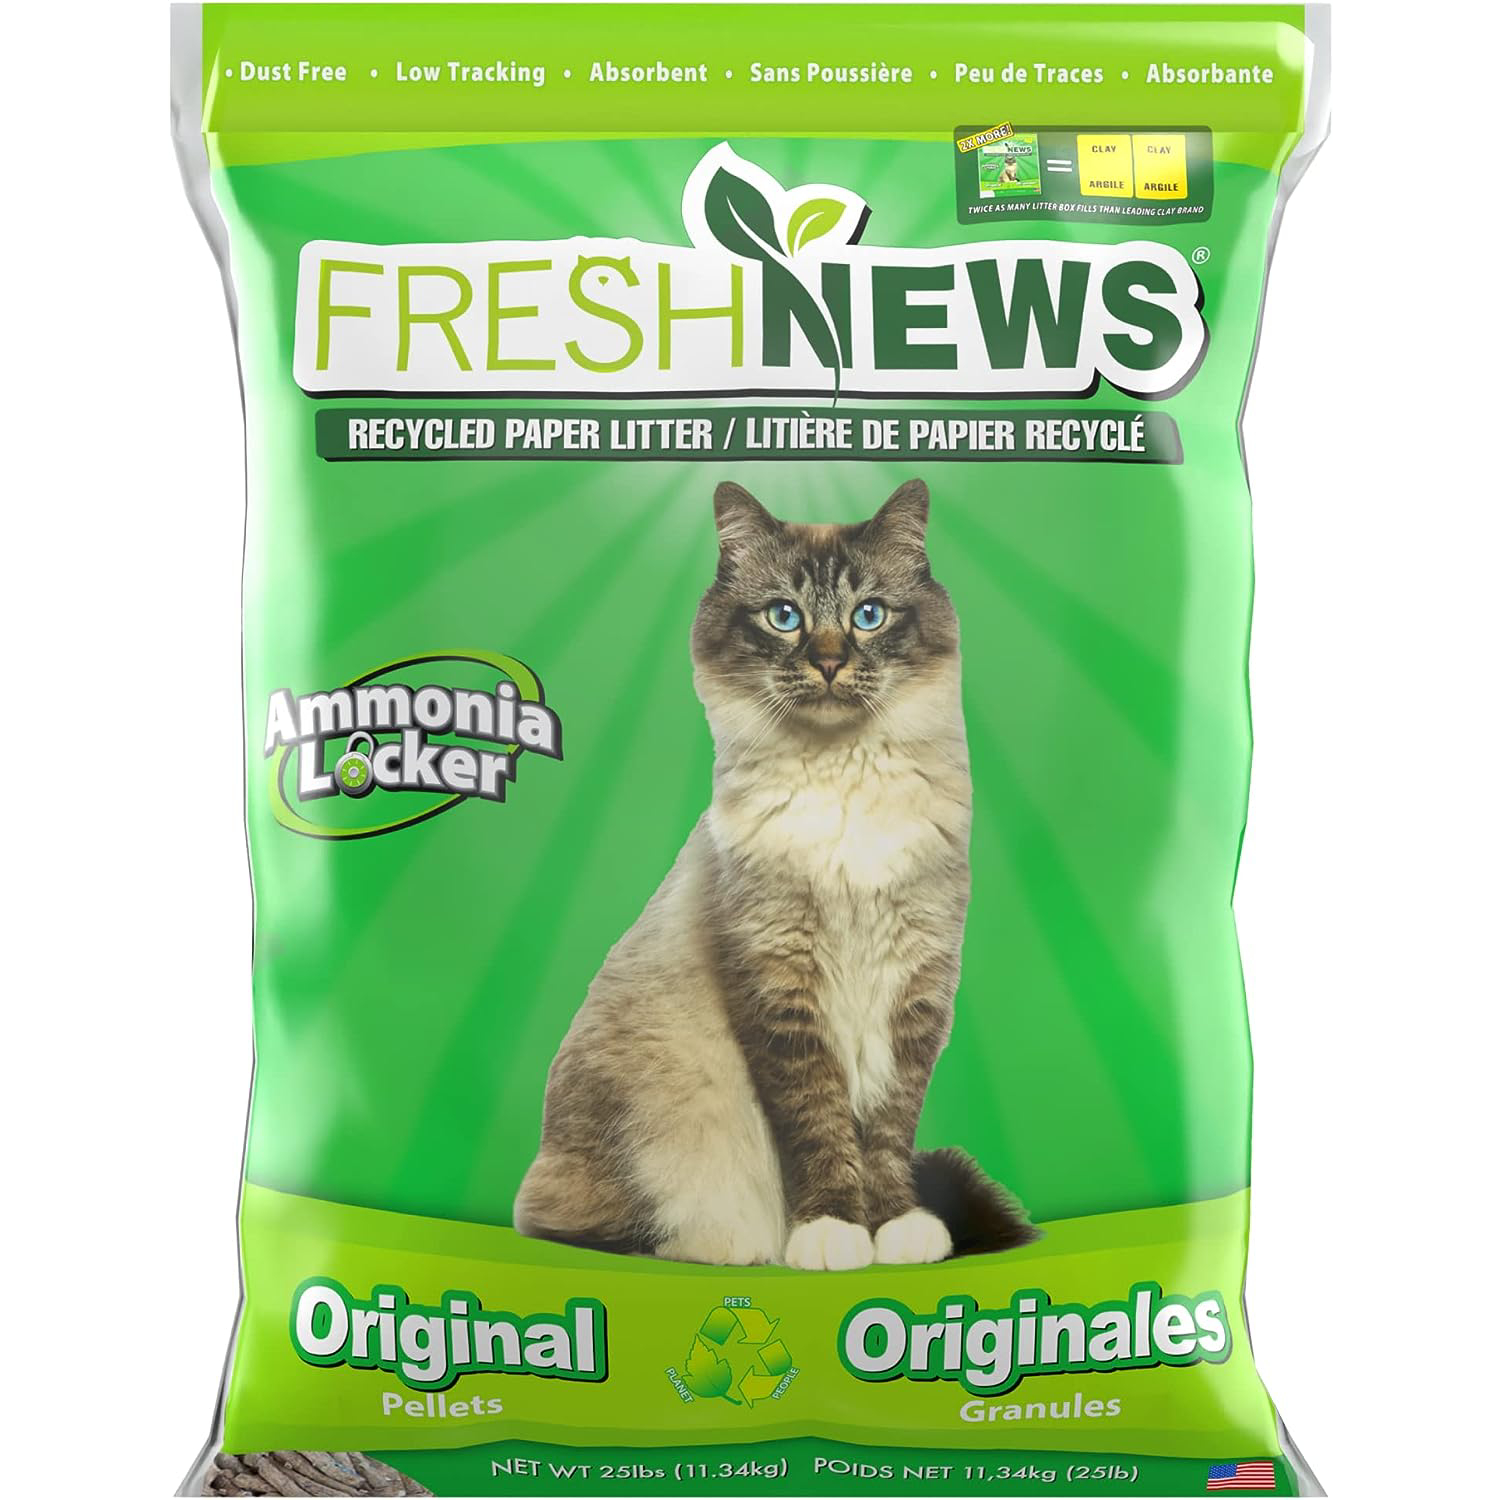 Fresh News Recycled Paper, Original Pellet Cat Litter, 25 Pound New